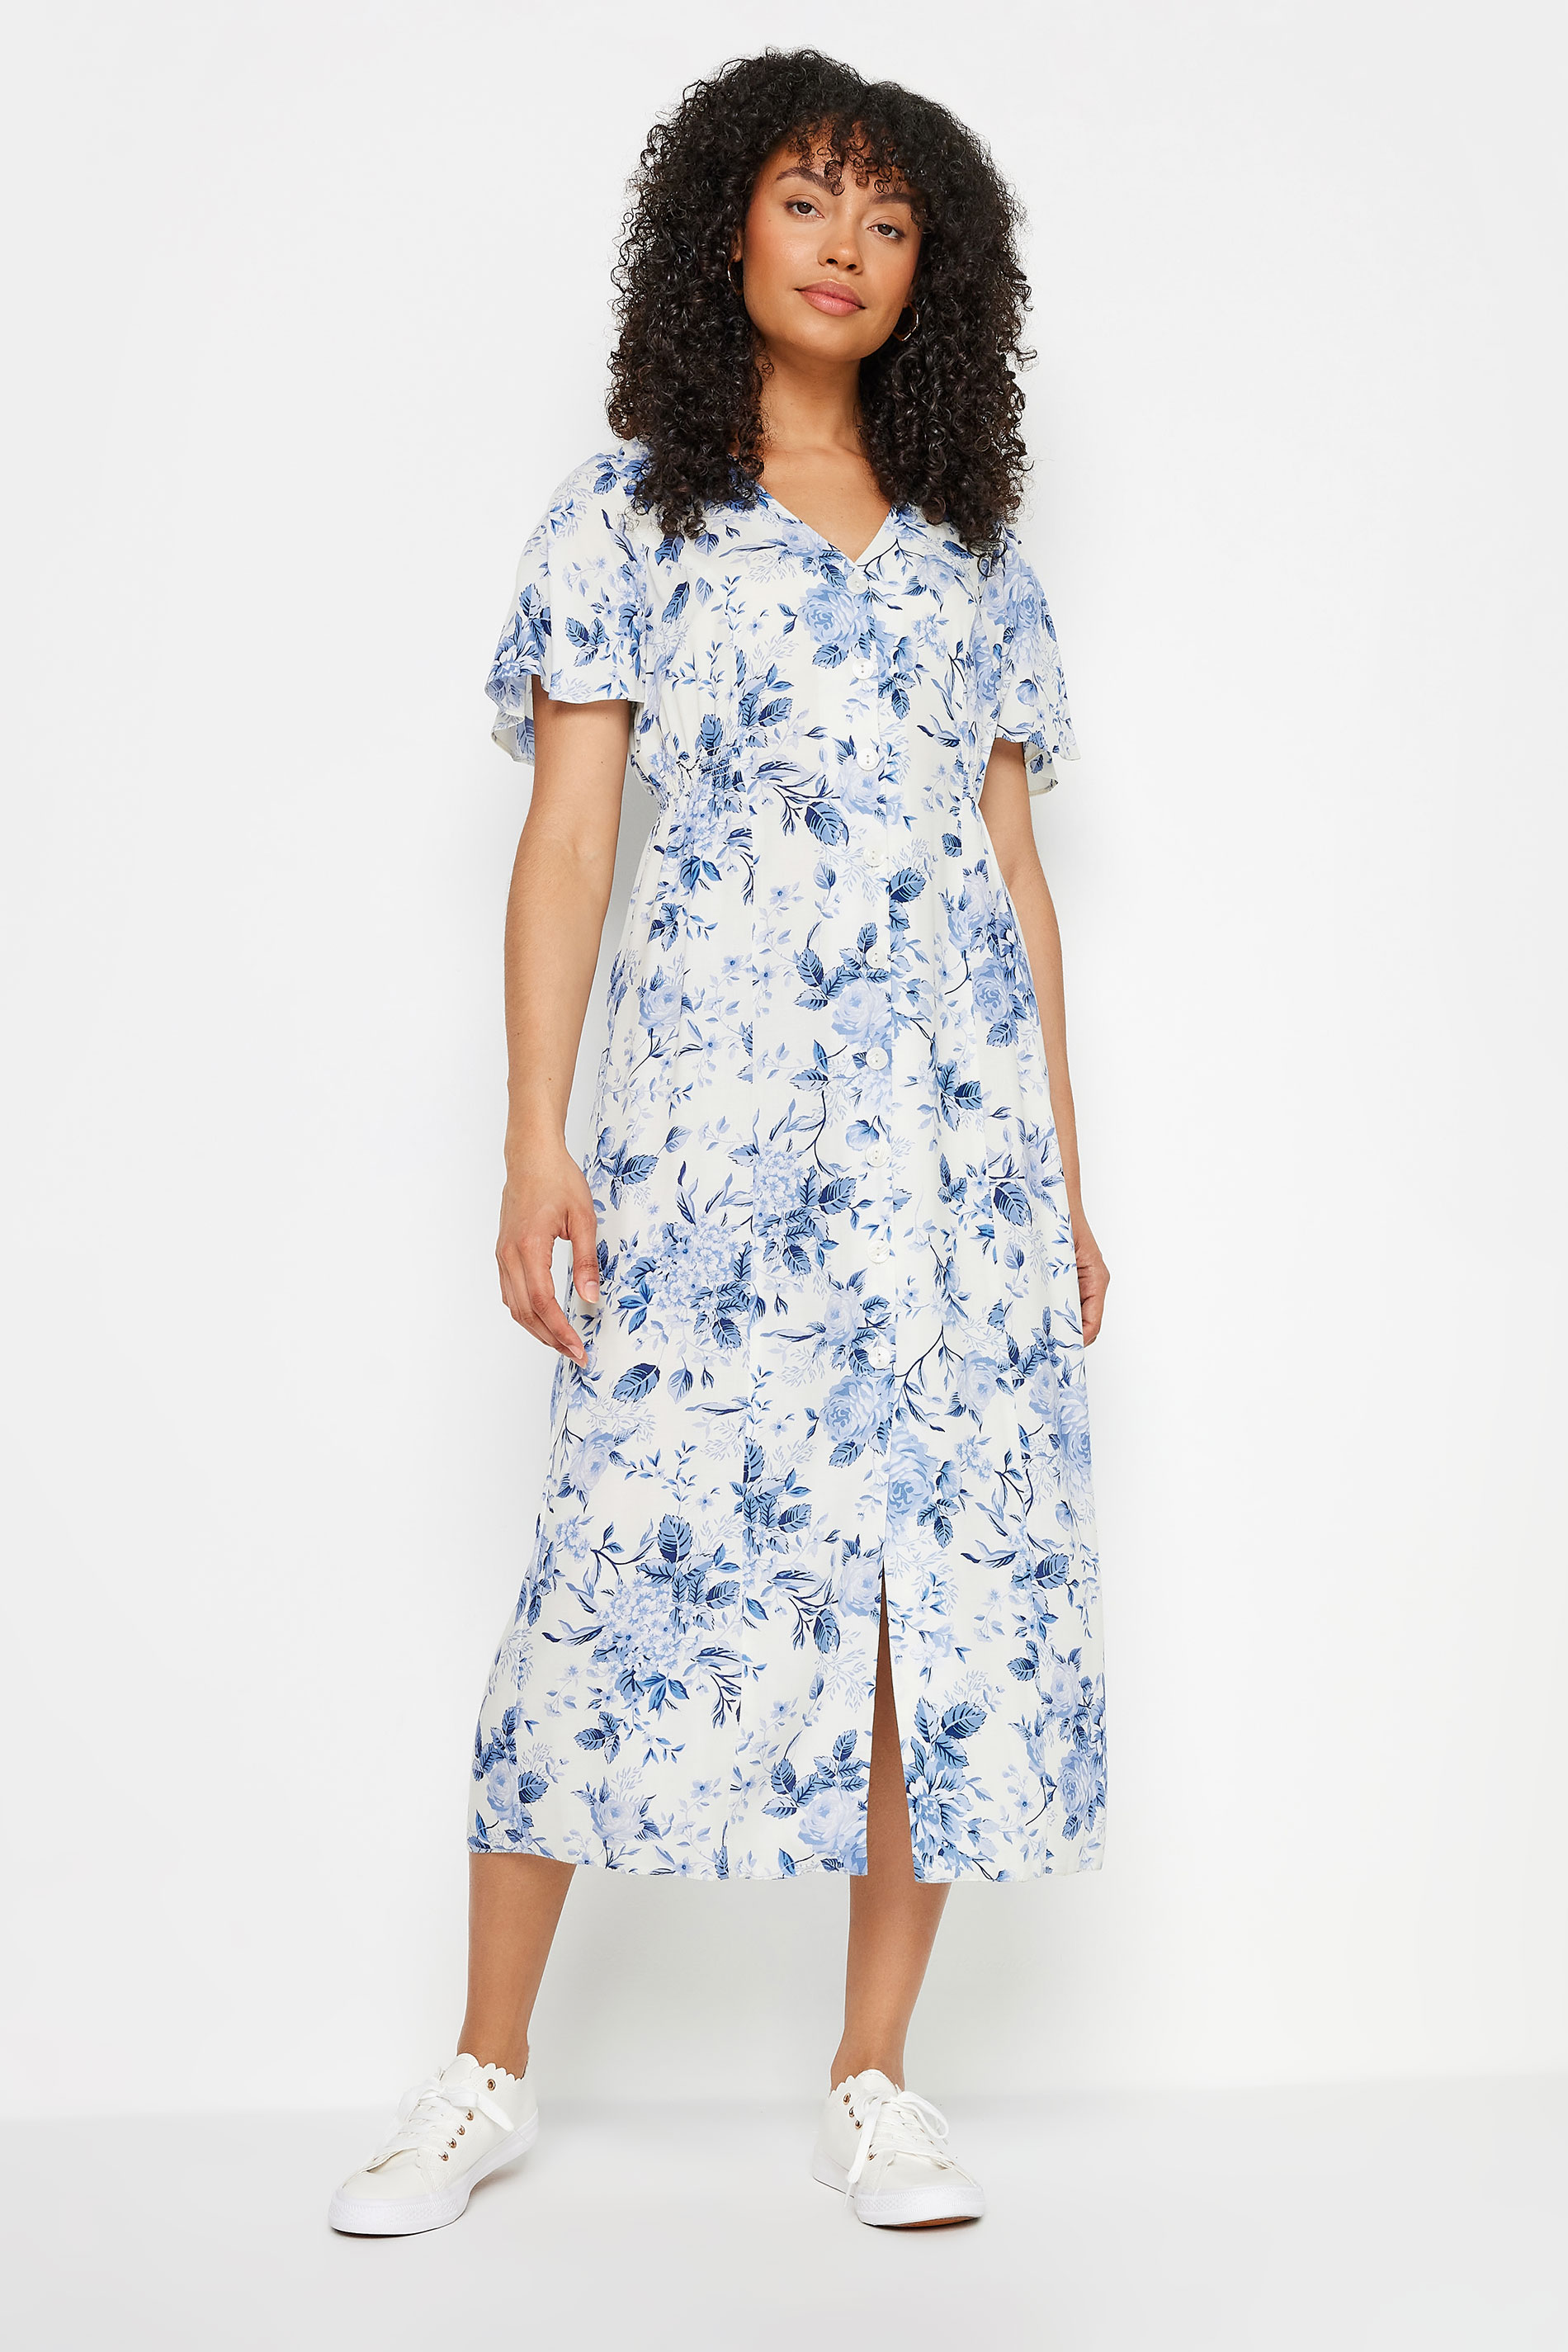 M&Co White & Blue Floral Print Button Through Midi Tea Dress | M&Co 2